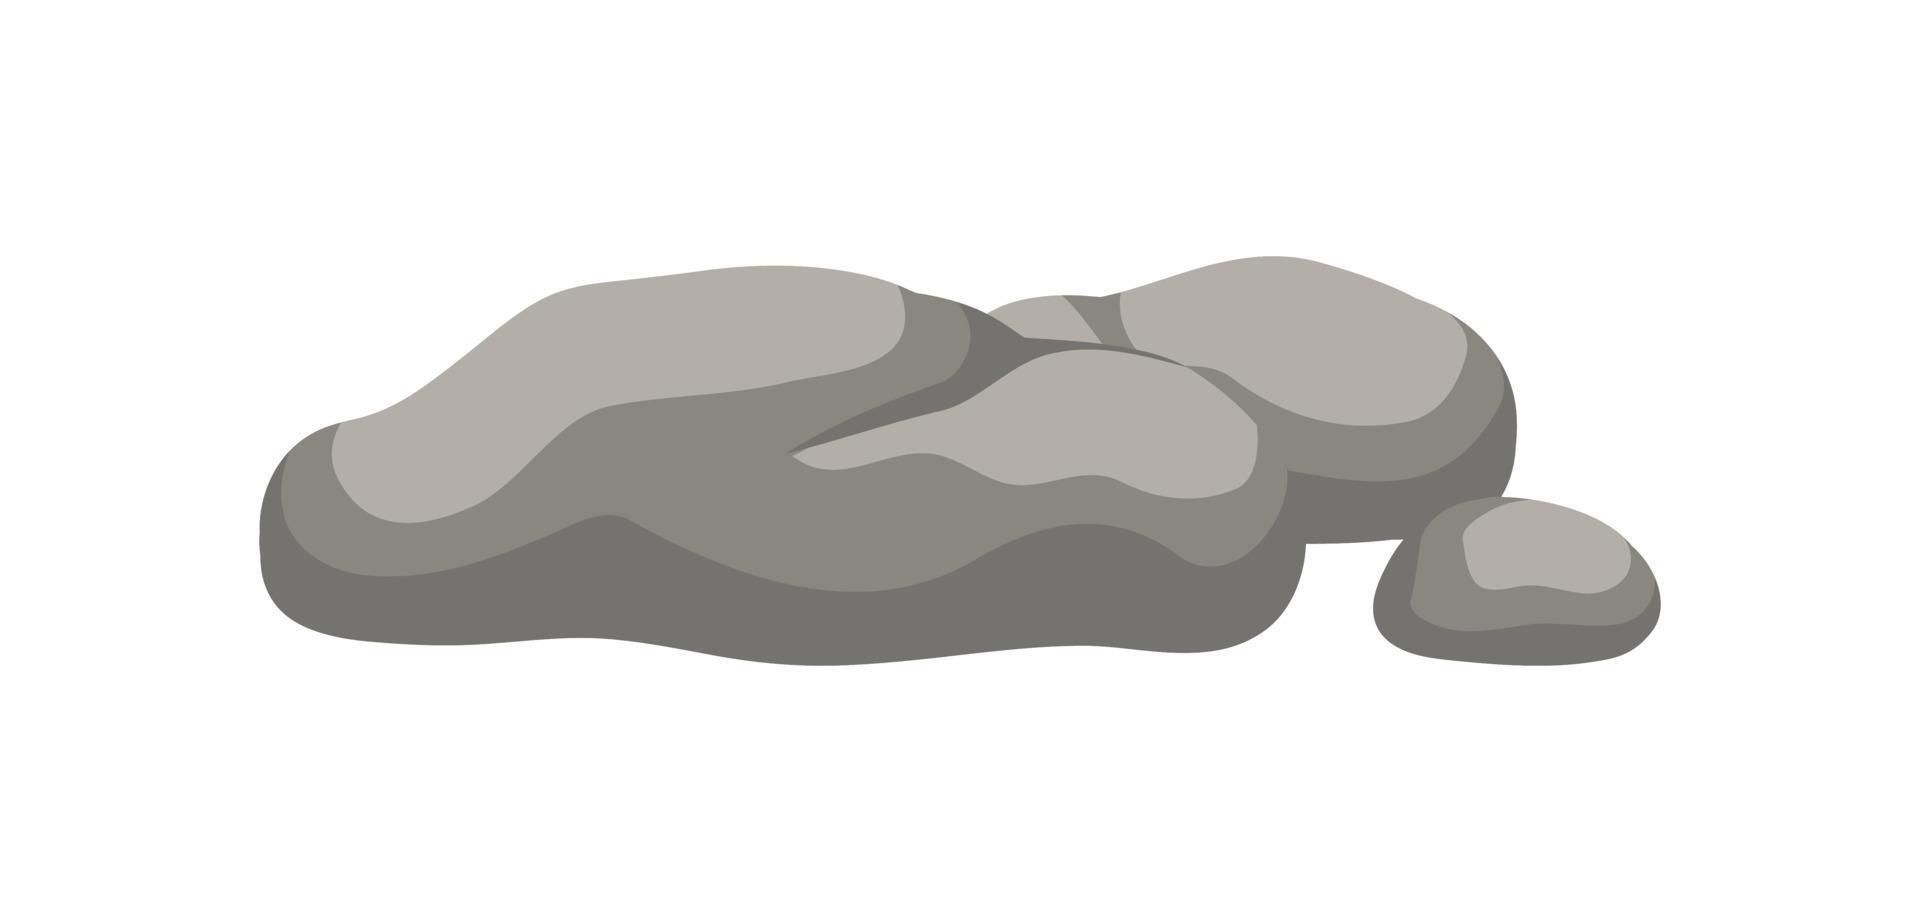 Rock stone boulder formation cartoon vector illustration.